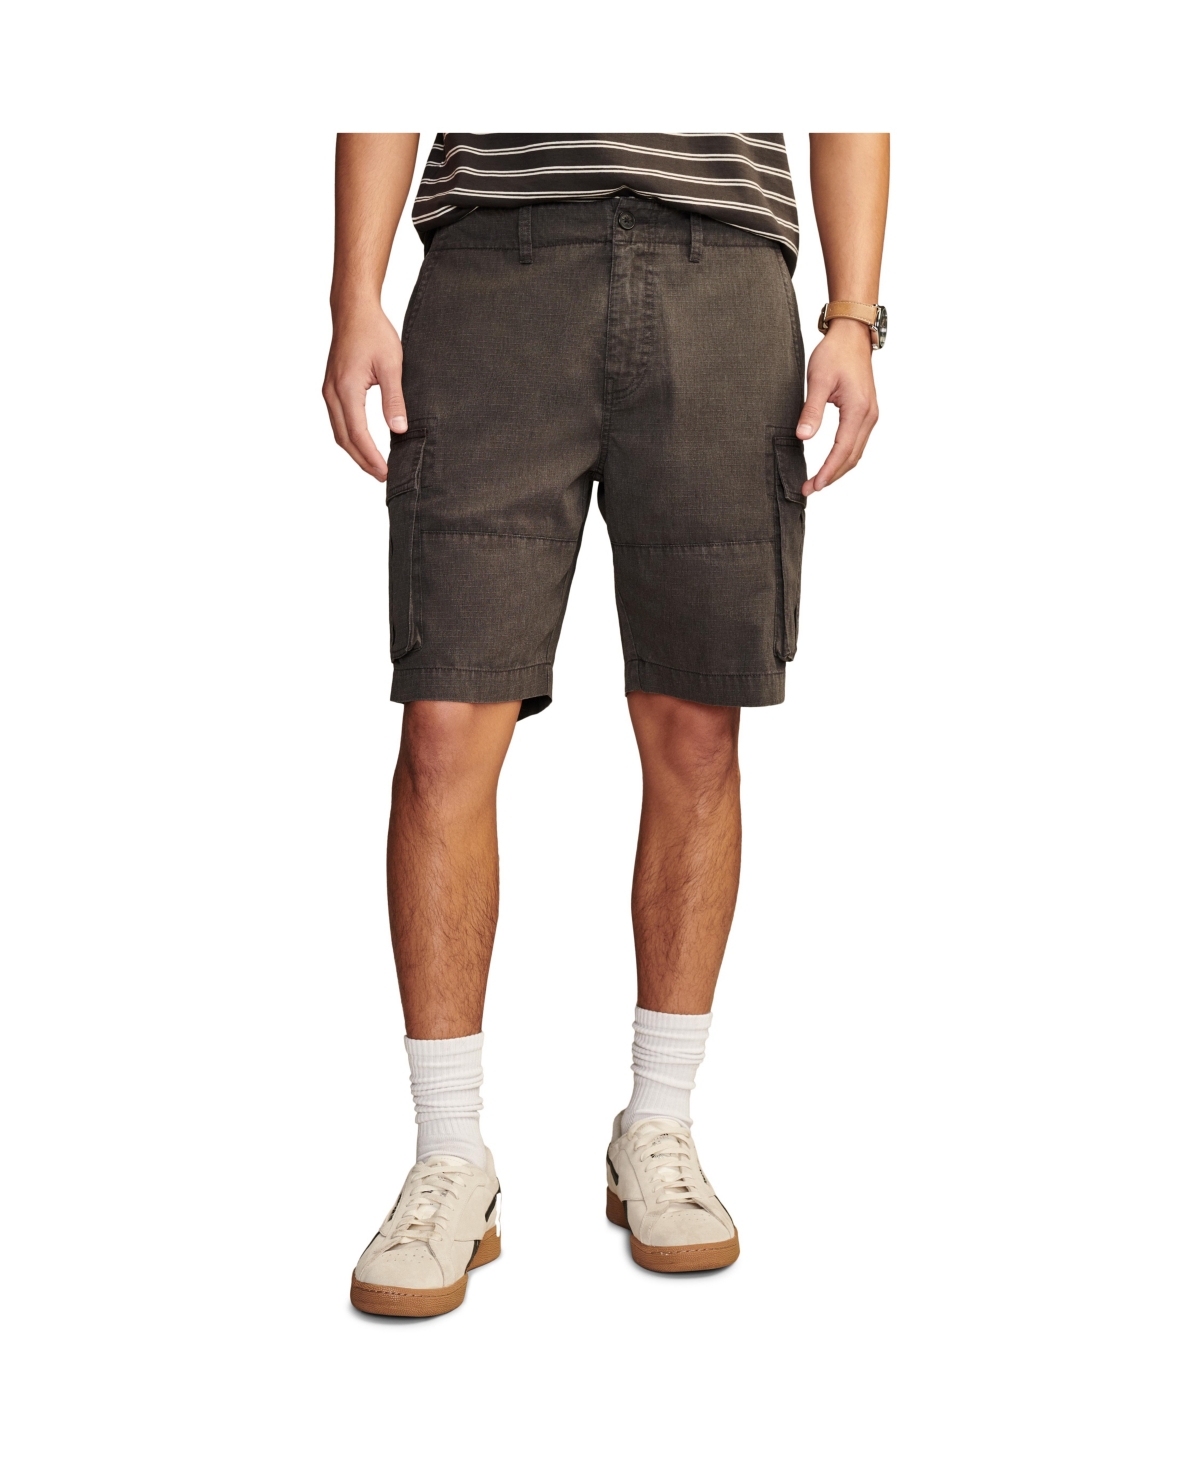 Men's 9" Ripstop Cargo Shorts - Twill